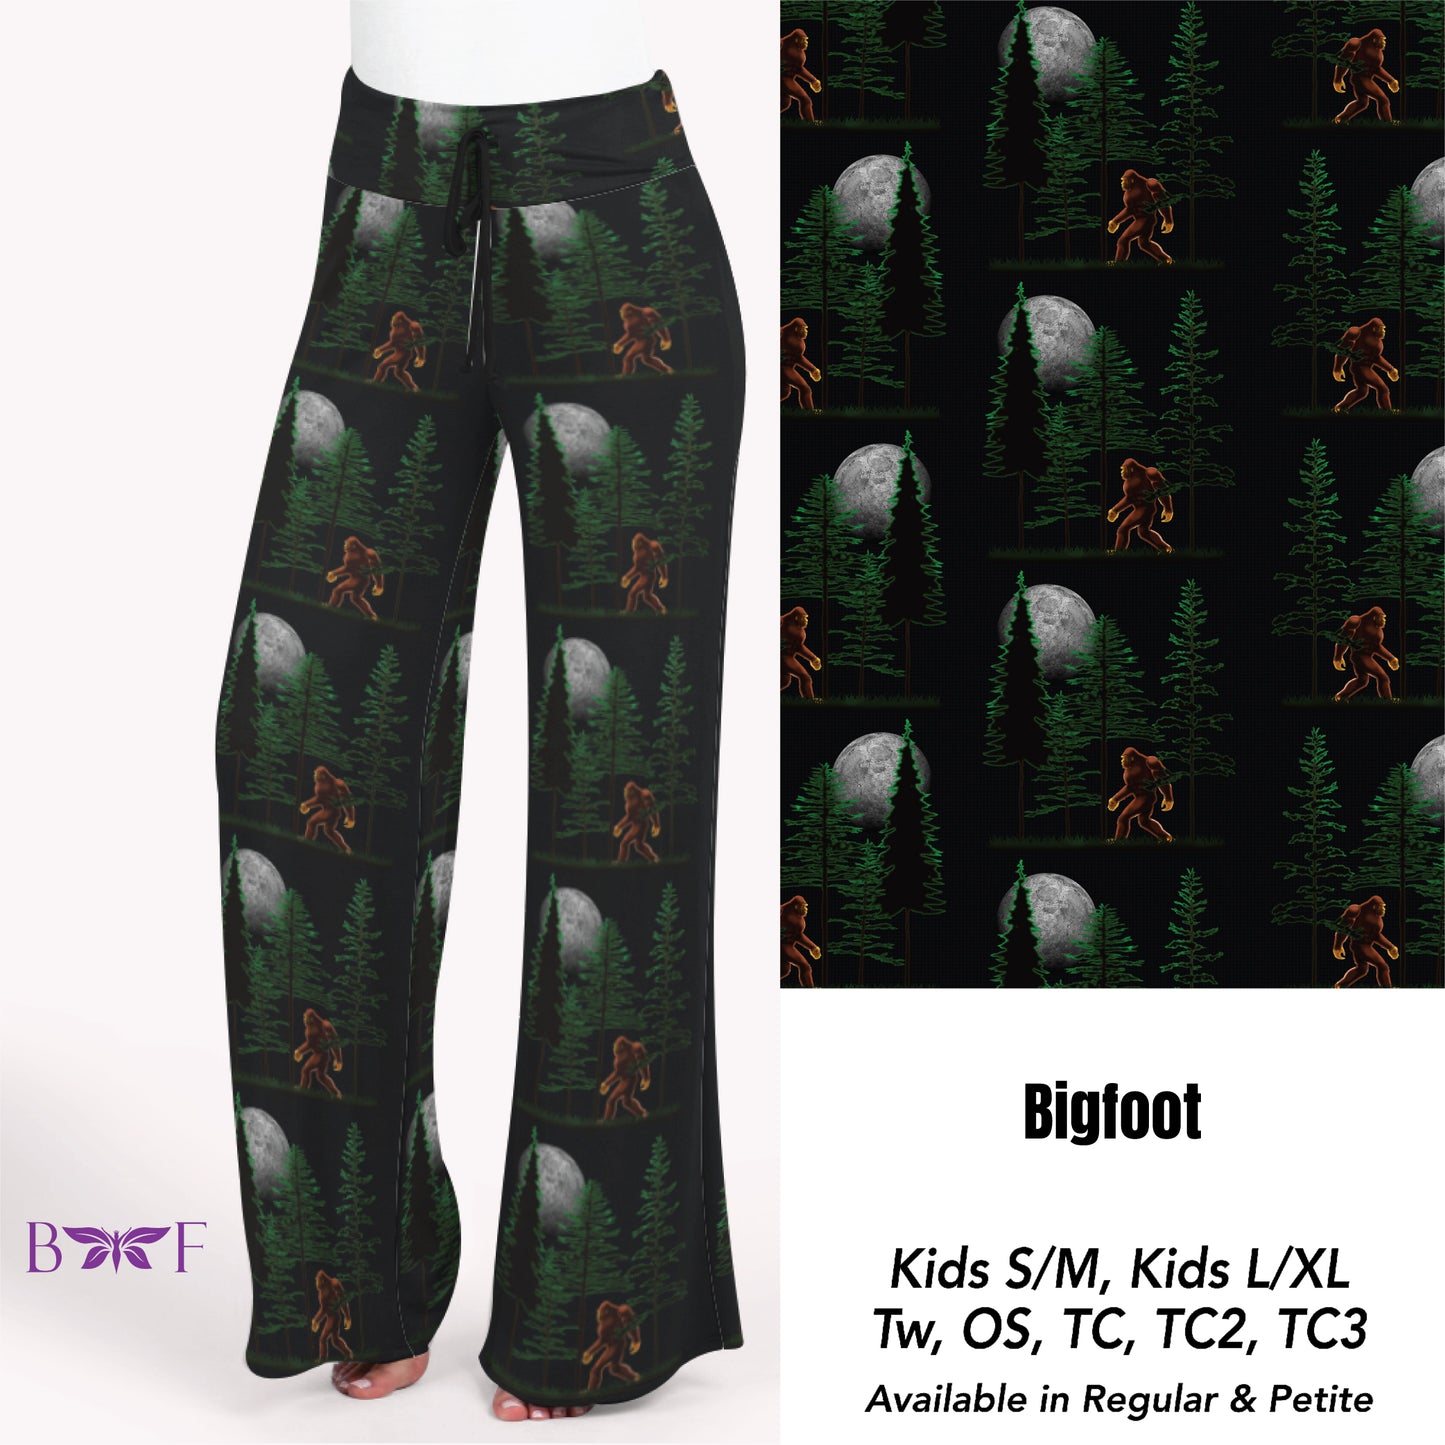 Bigfoot Leggings with pockets